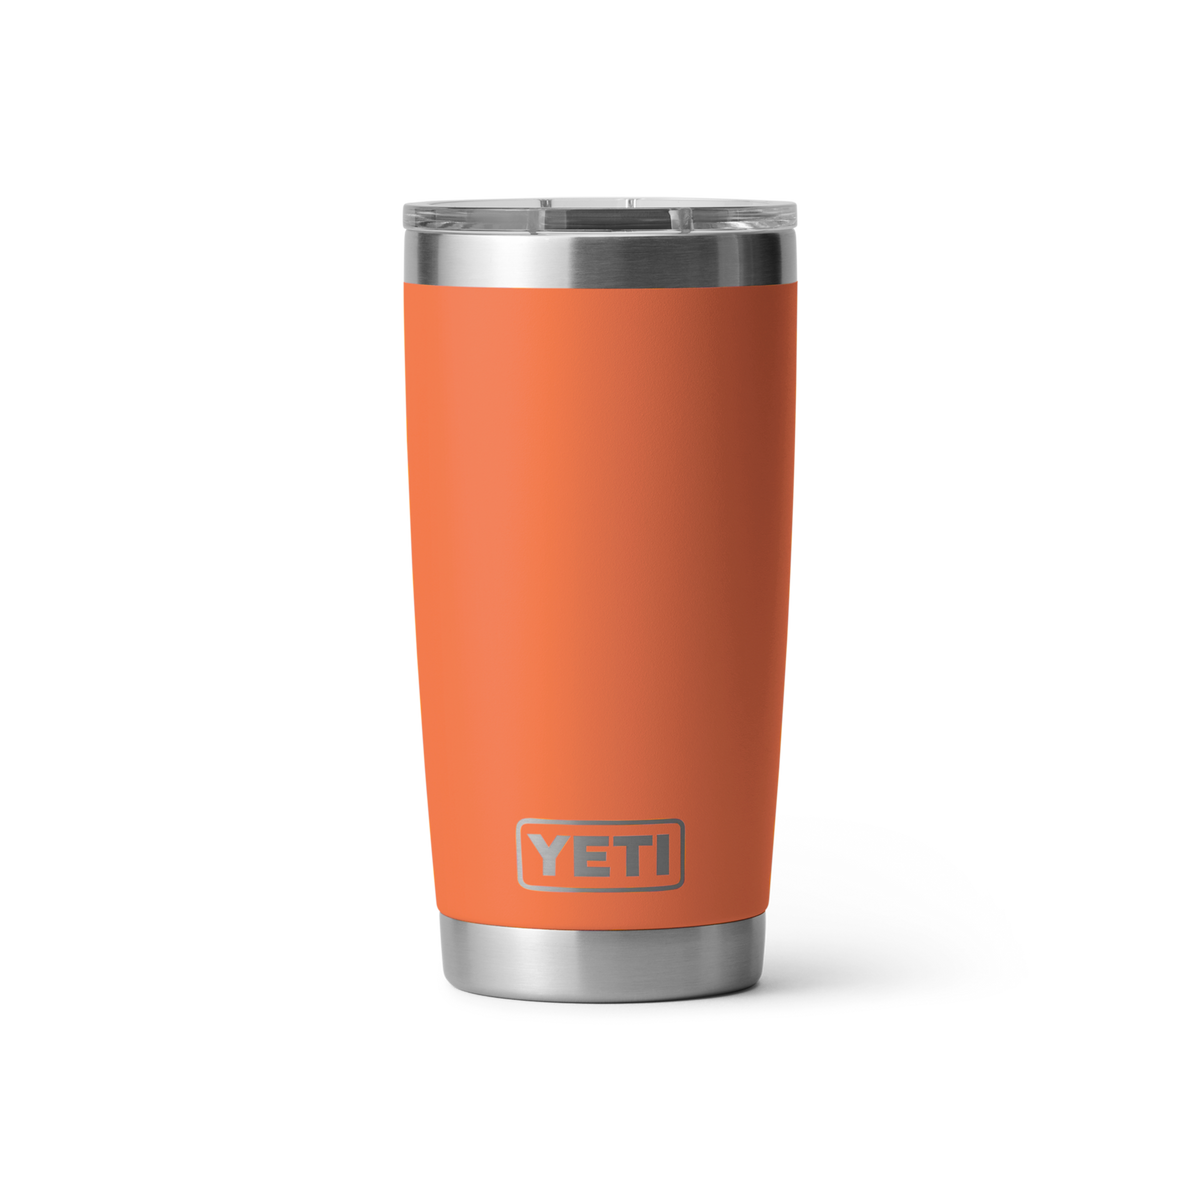 Cupholder for Yeti 24oz Coffee Mug or 10oz Lowball (Mug not included) Model  93